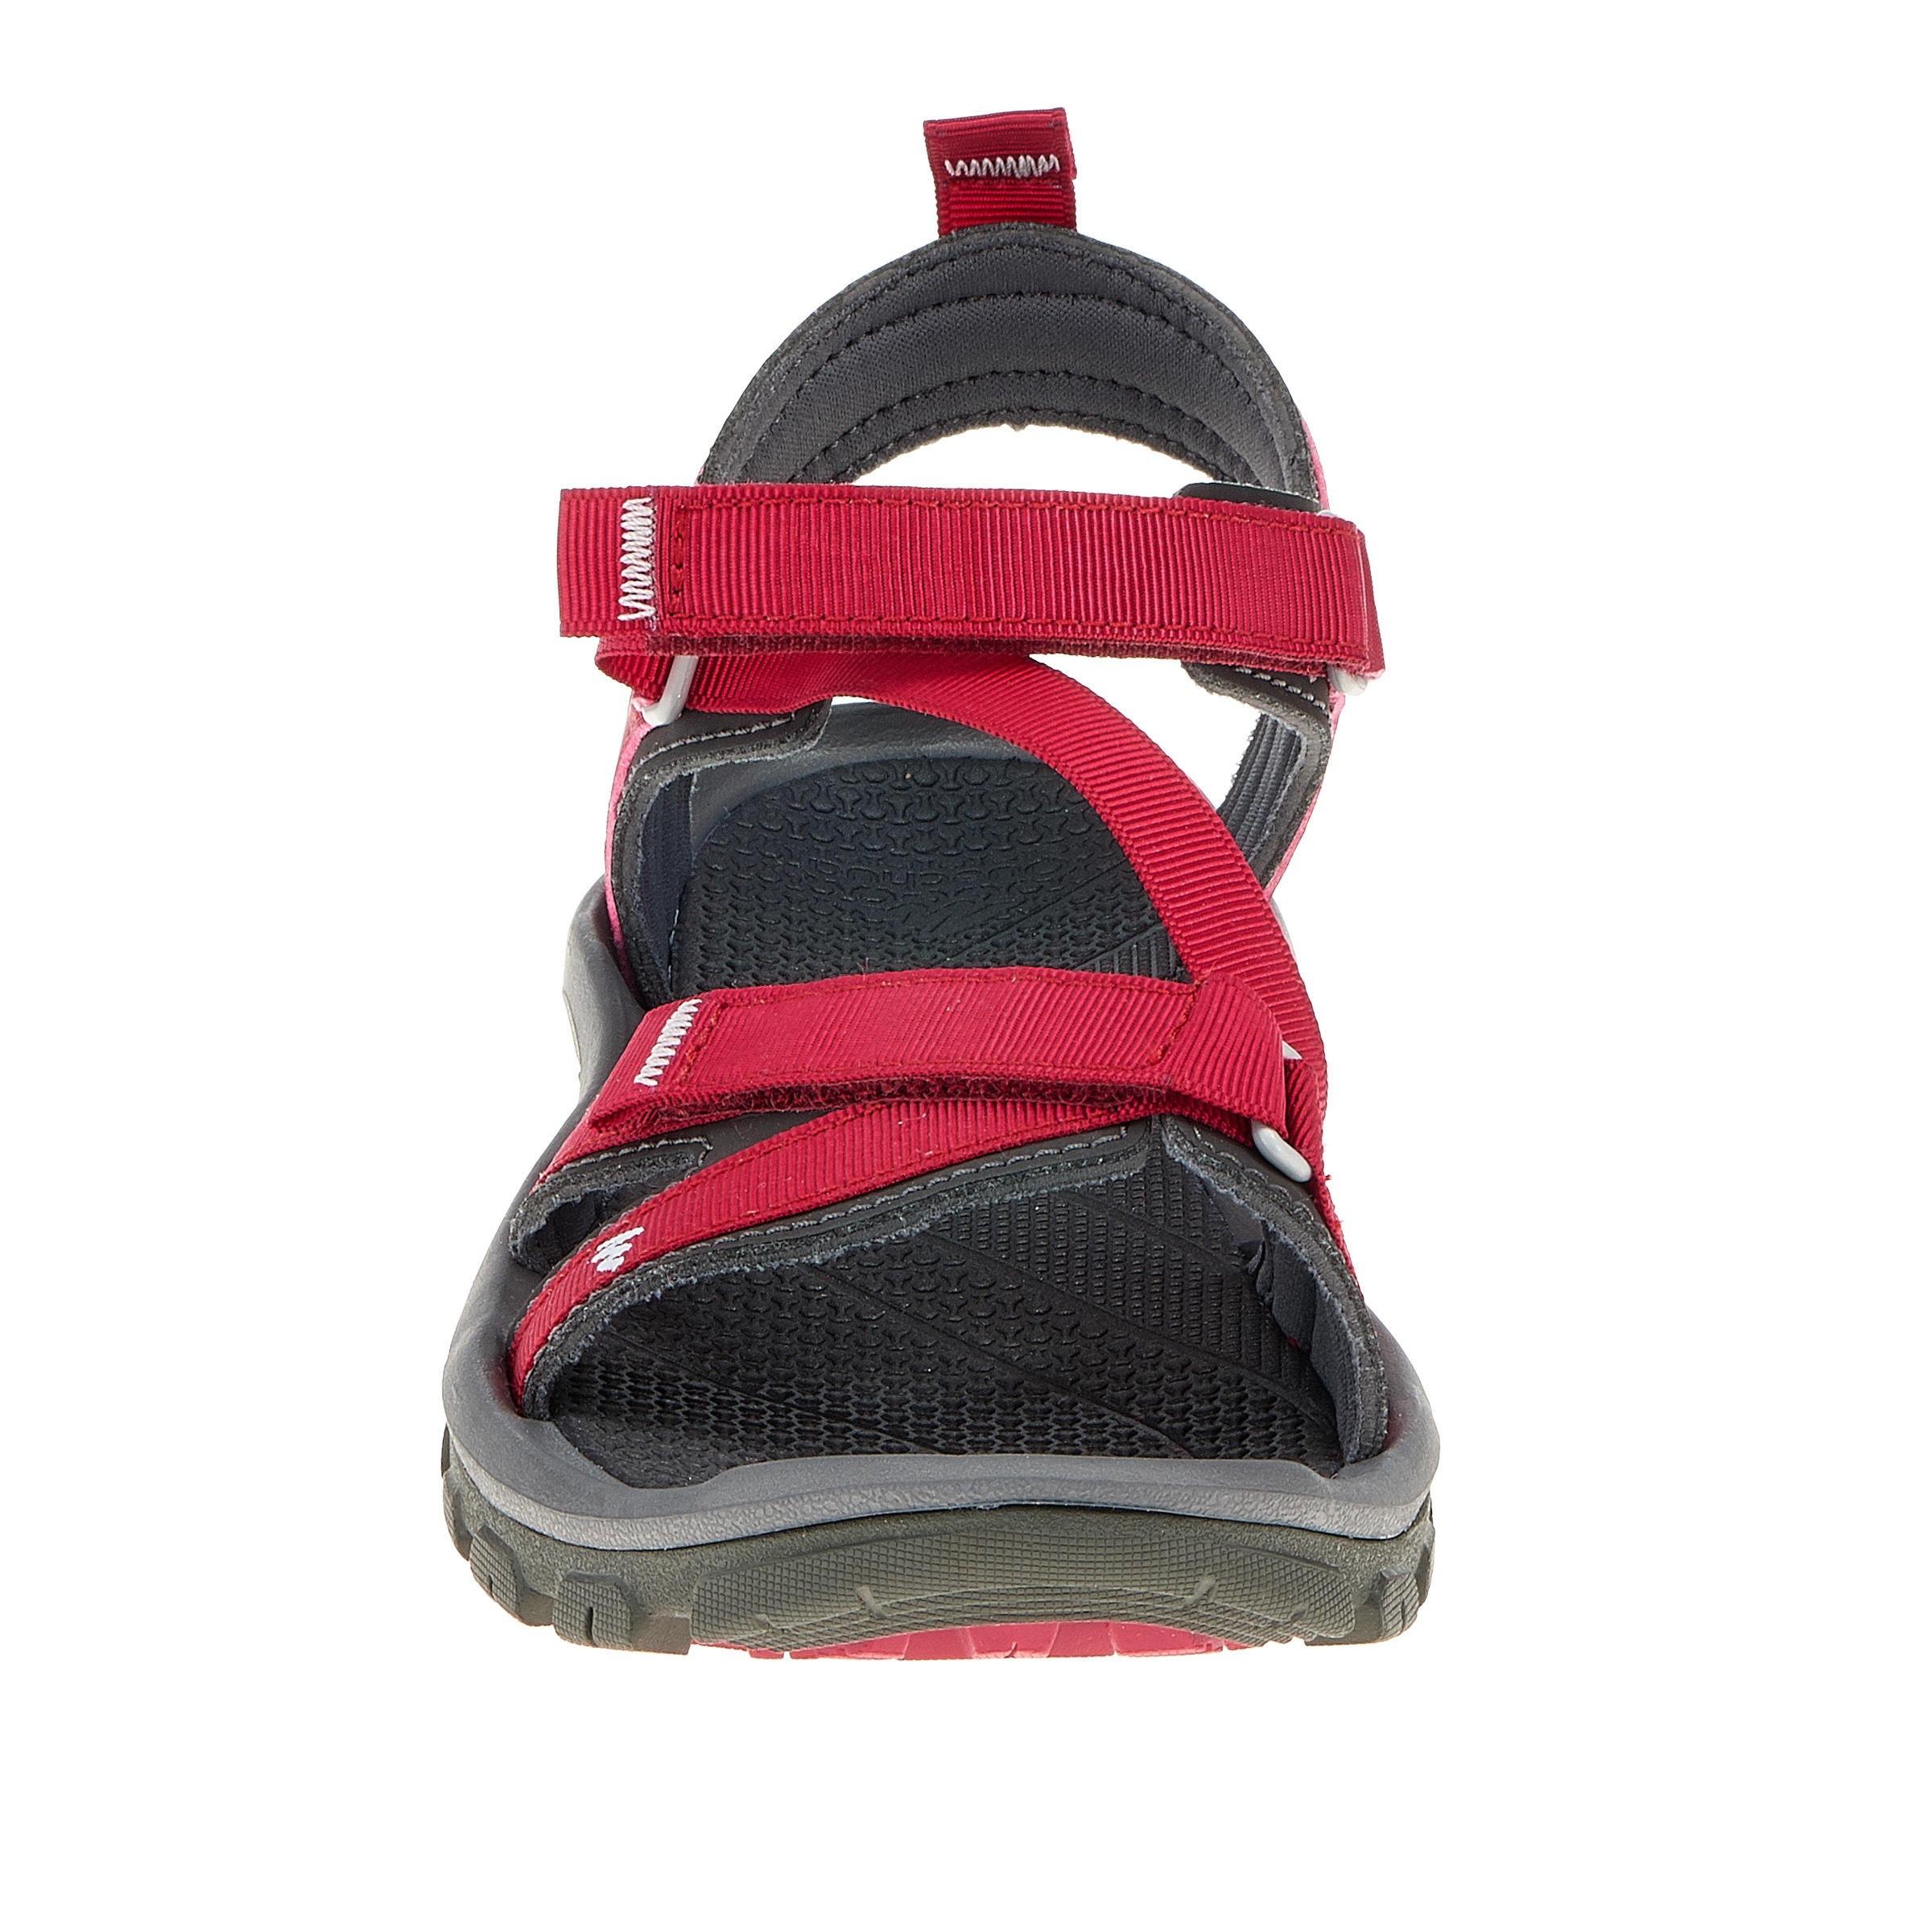 decathlon women's walking sandals